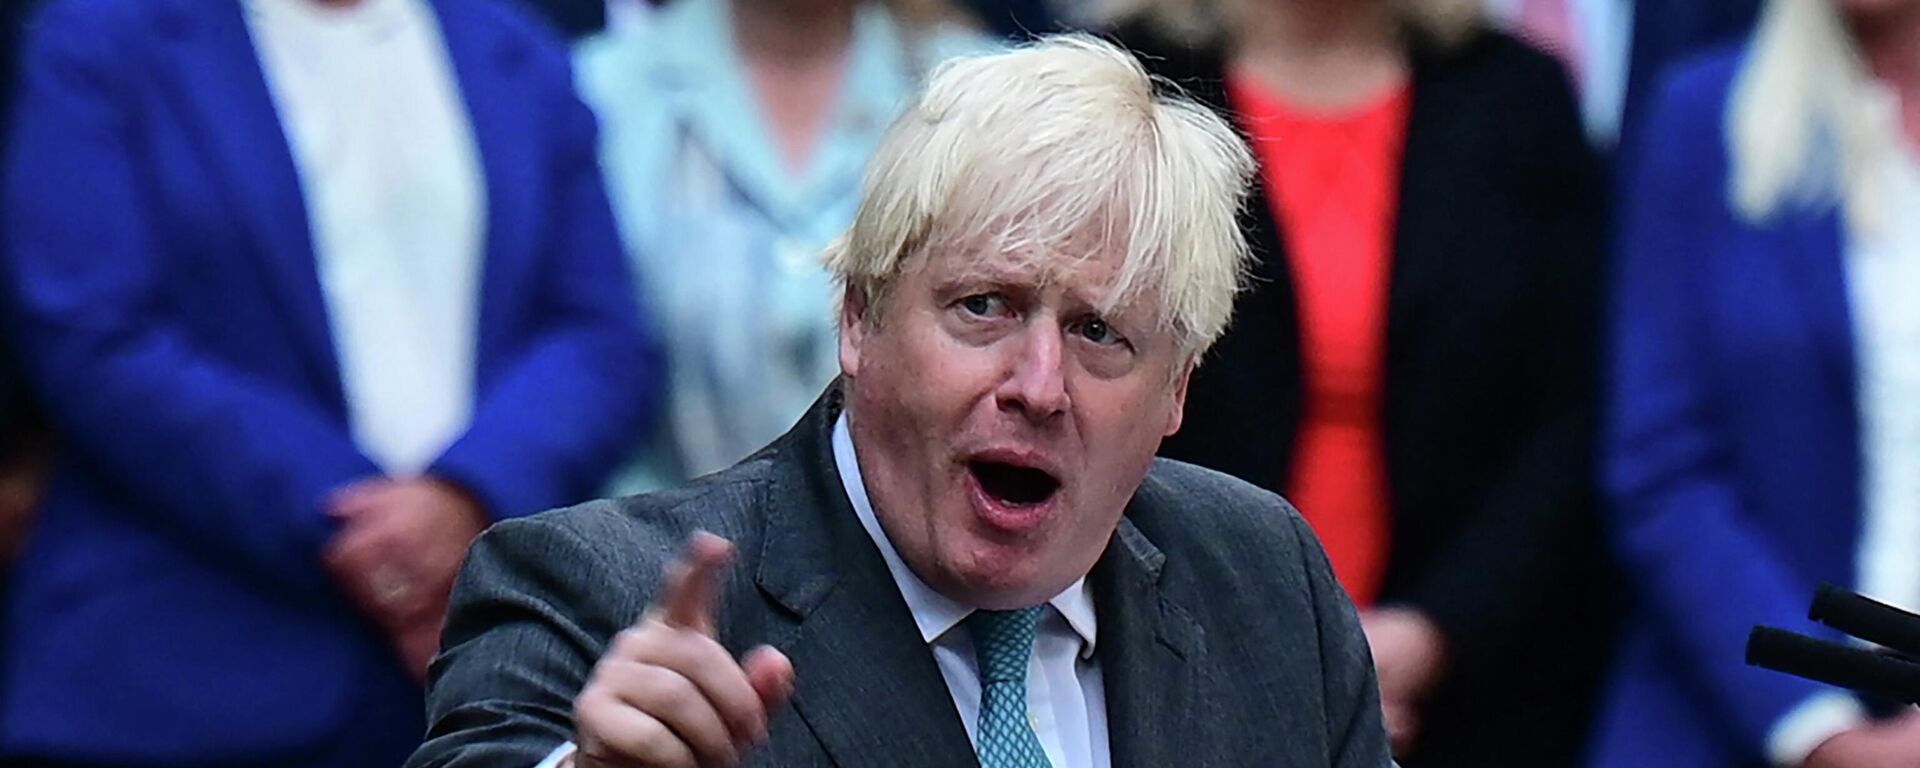 Boris Johnson delivers his final speech outside 10 Downing Street - Sputnik International, 1920, 23.09.2022